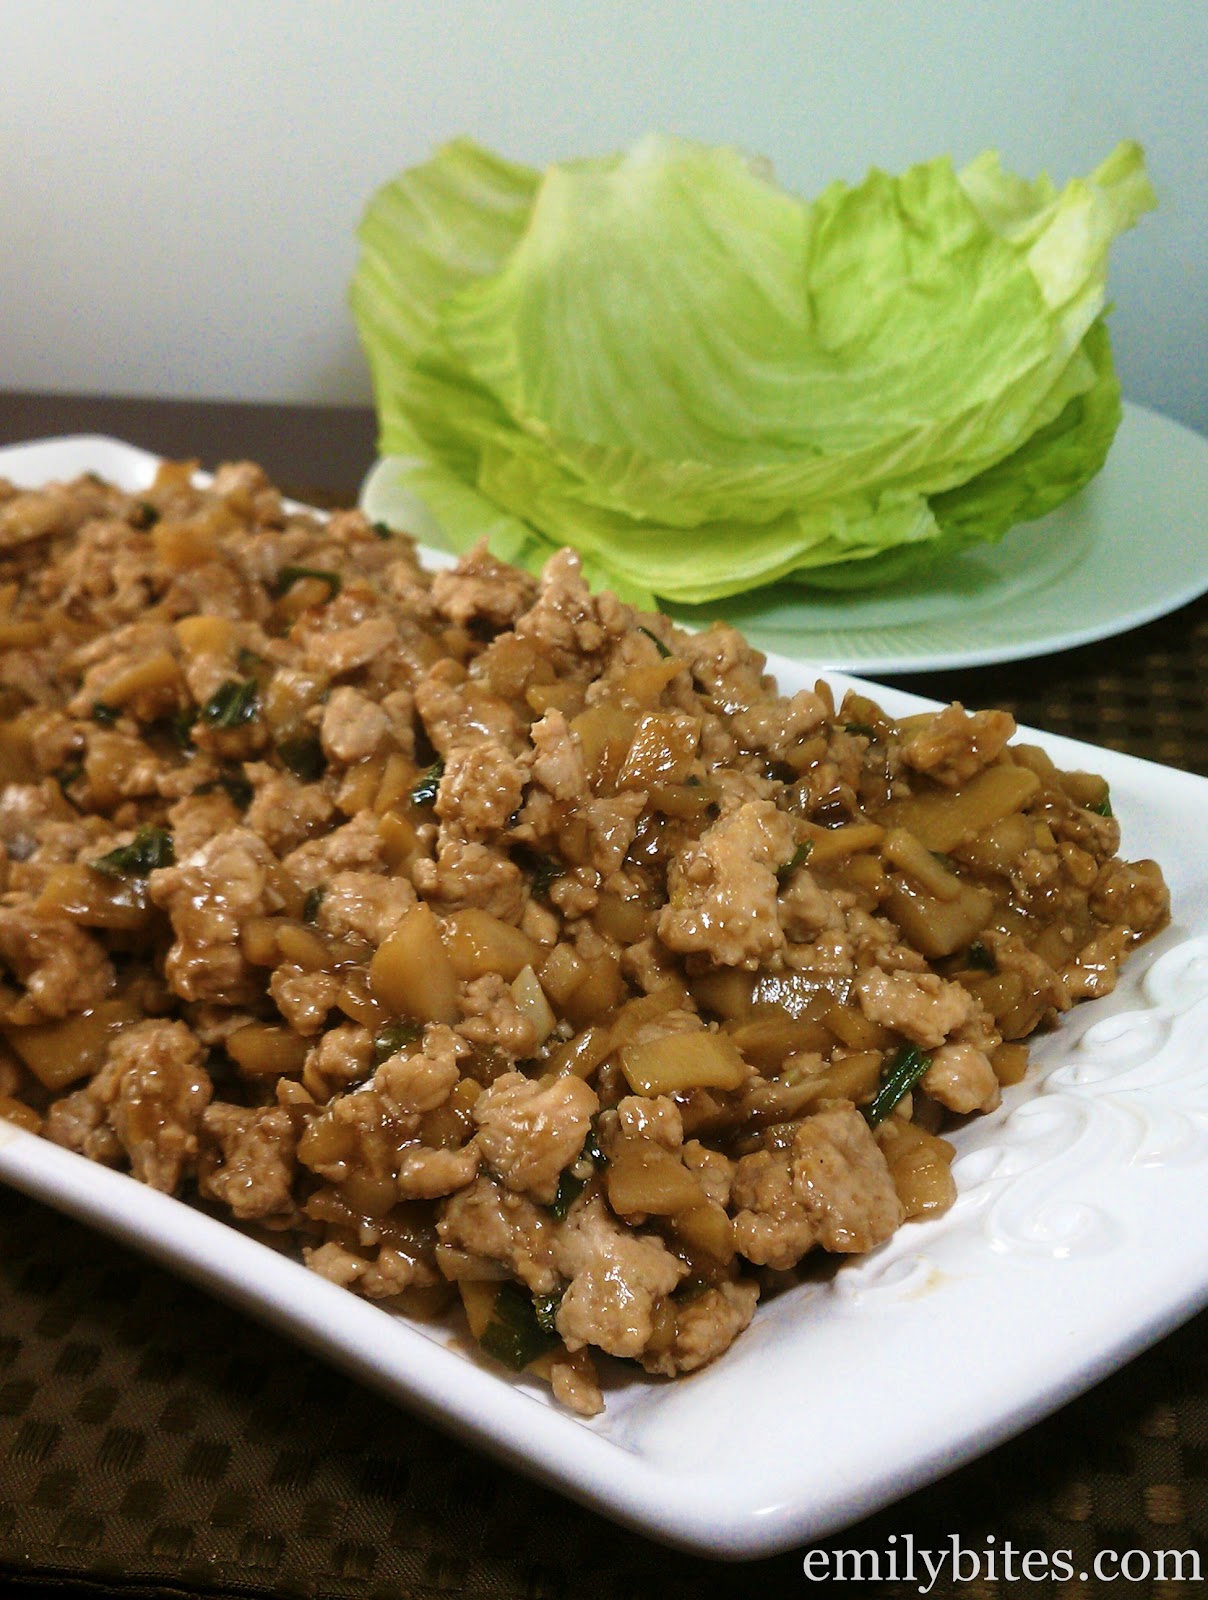 Pf Changs Lettuce Wraps Ingredients